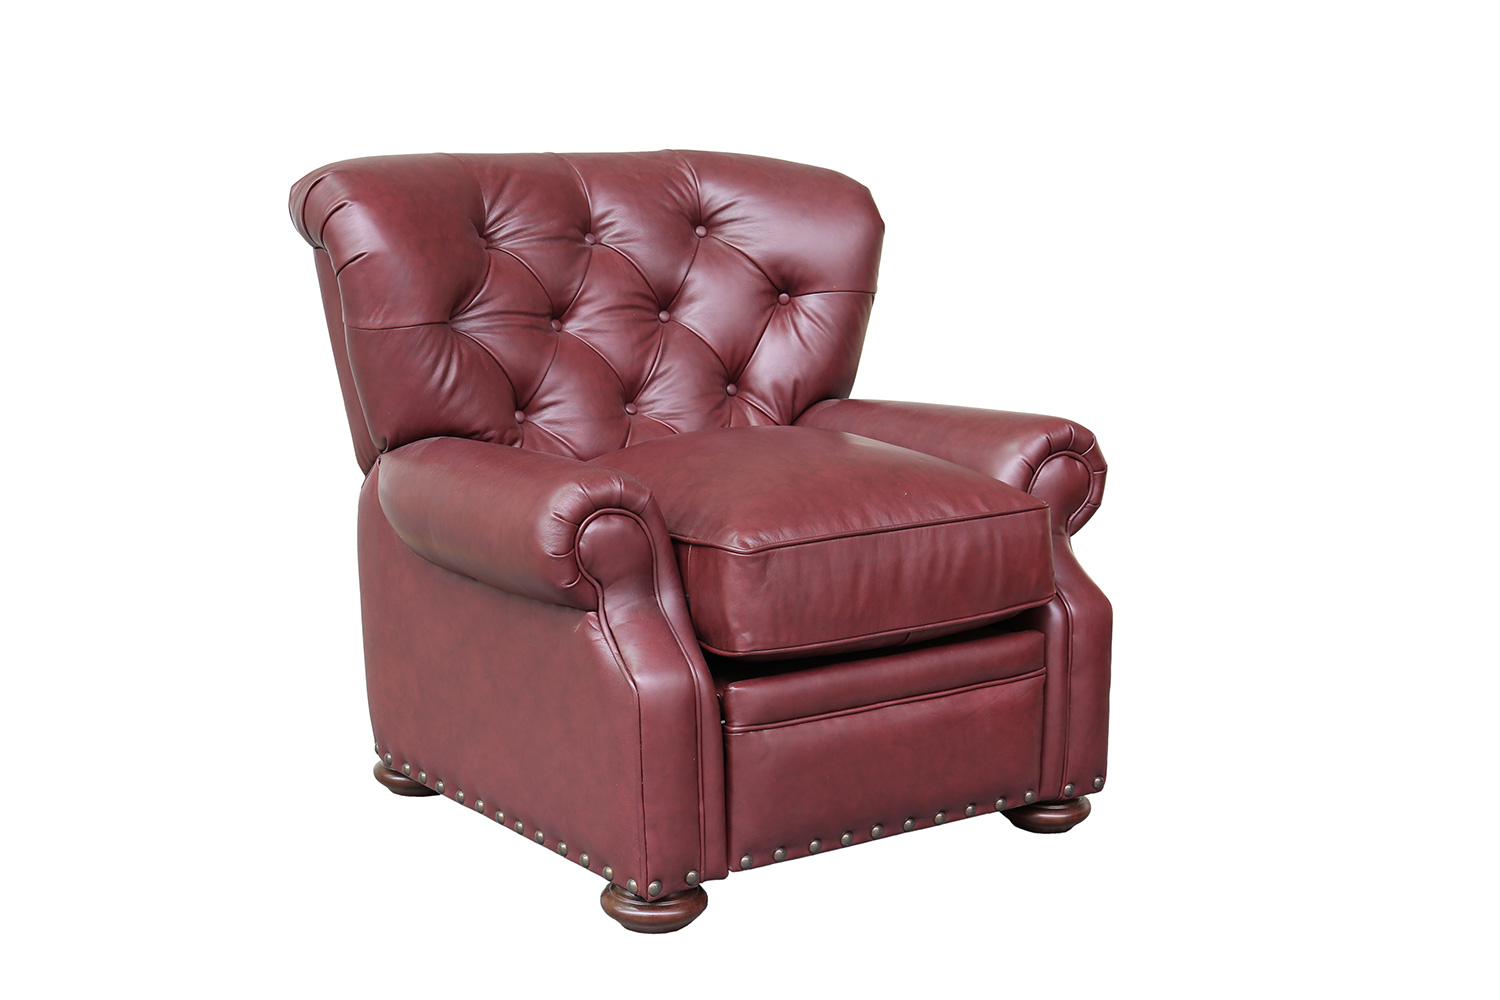 Barcalounger Sinclair Recliner Chair - Shoreham Wine/All Leather